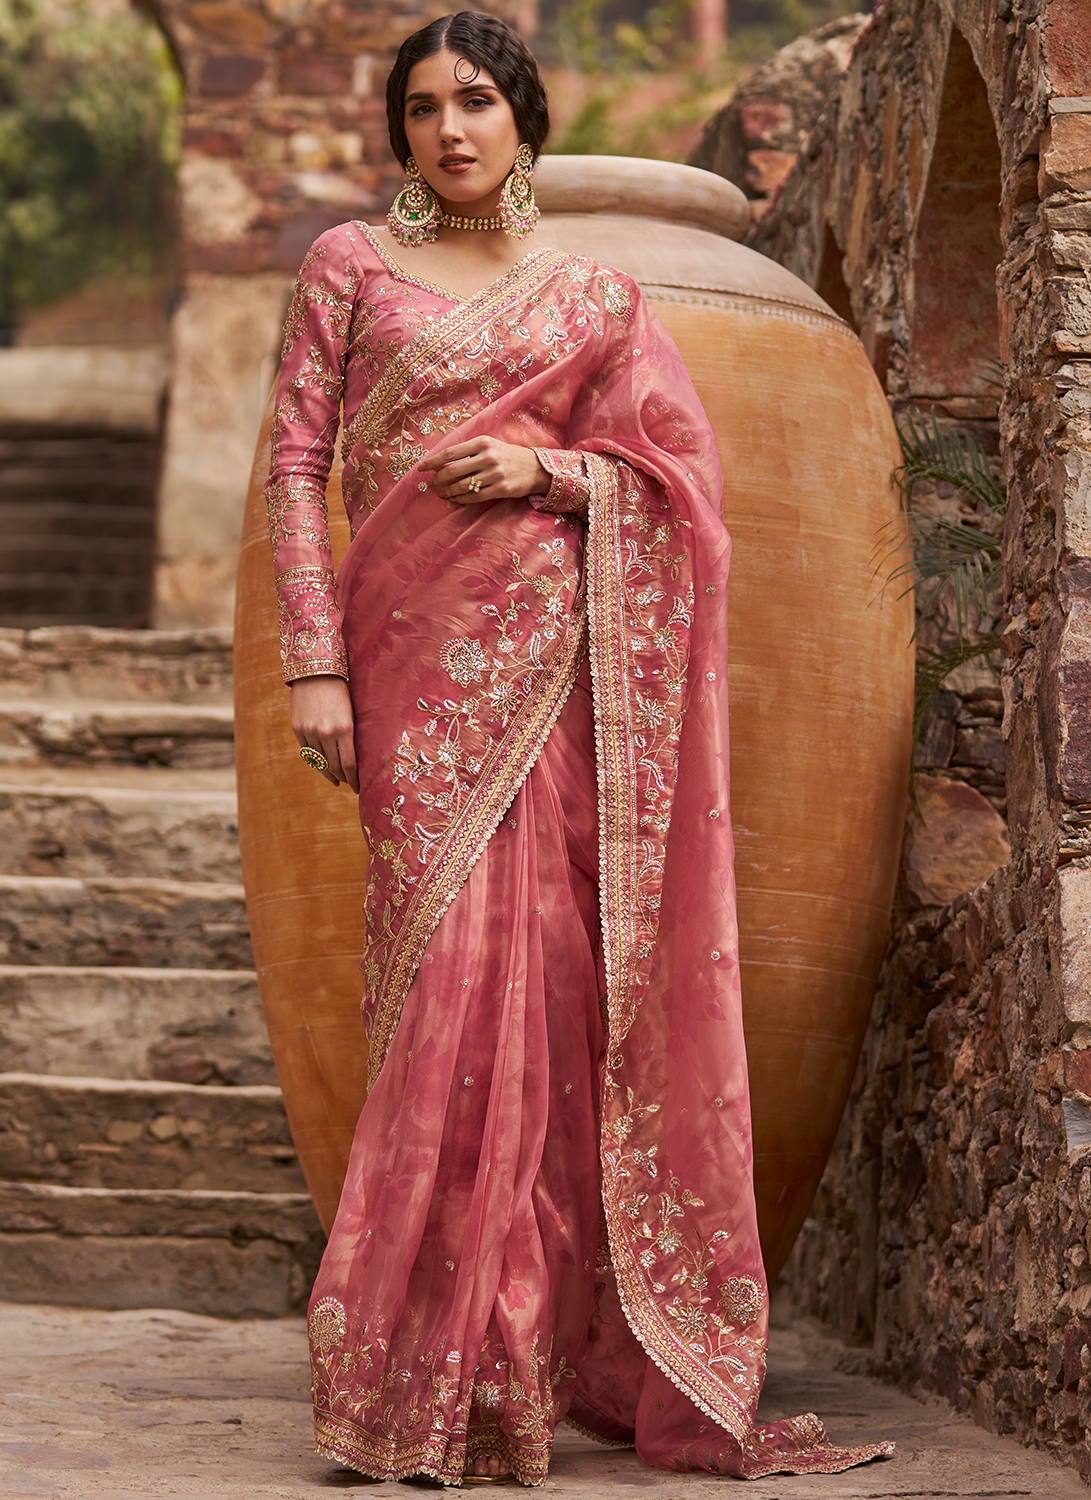 Lehenga saree drape ready to wear saree